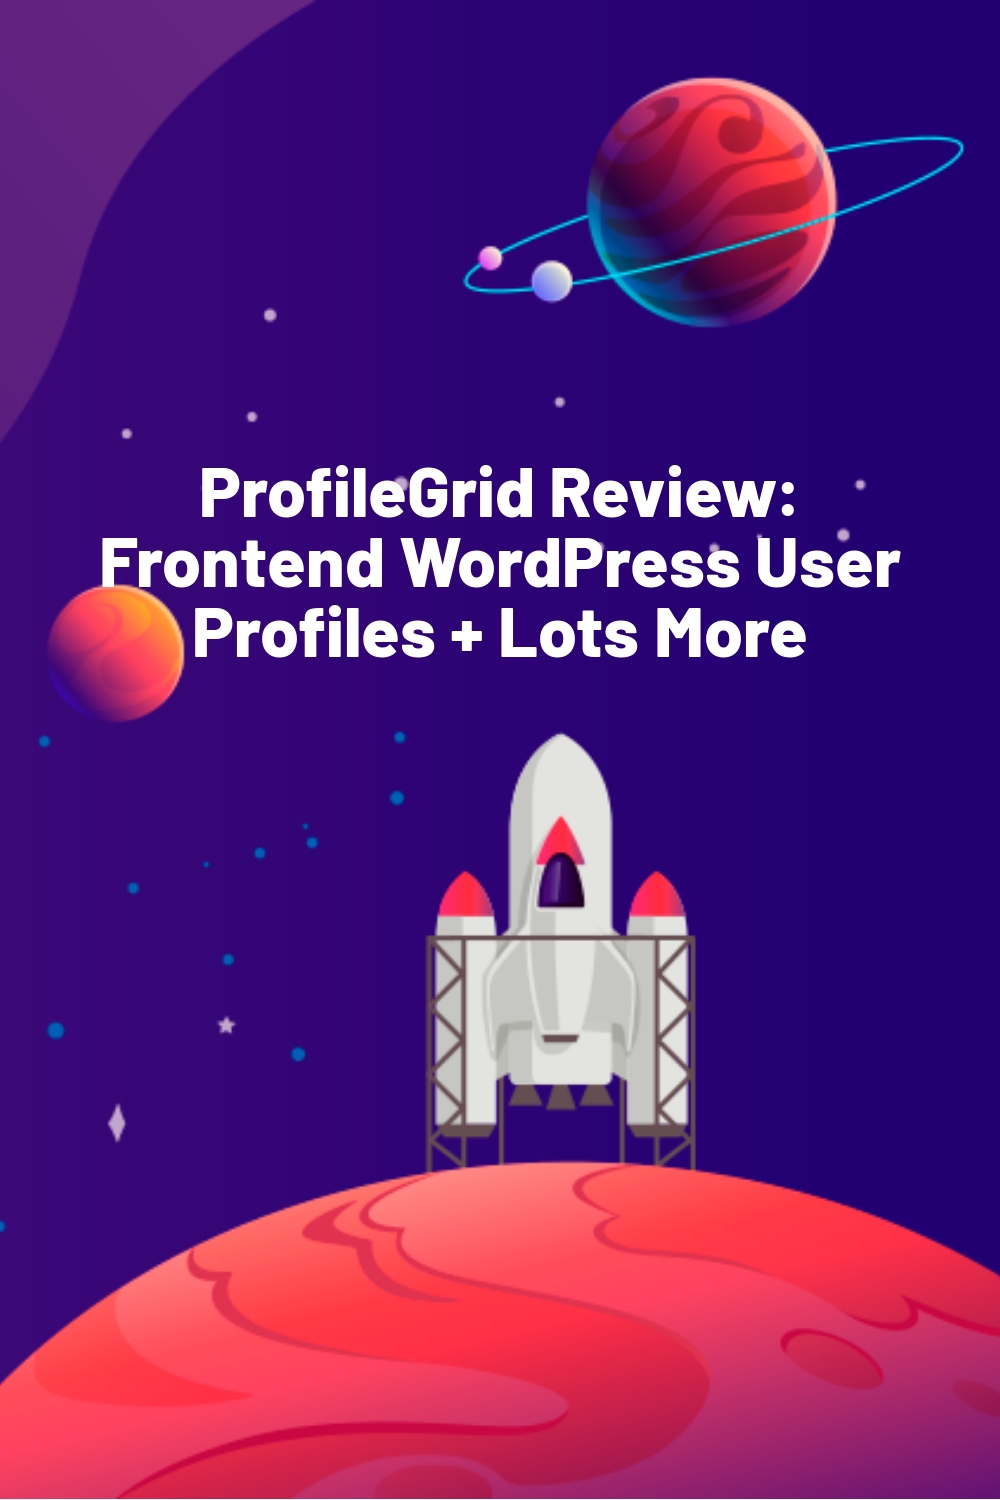 ProfileGrid Review: Frontend WordPress User Profiles + Lots More